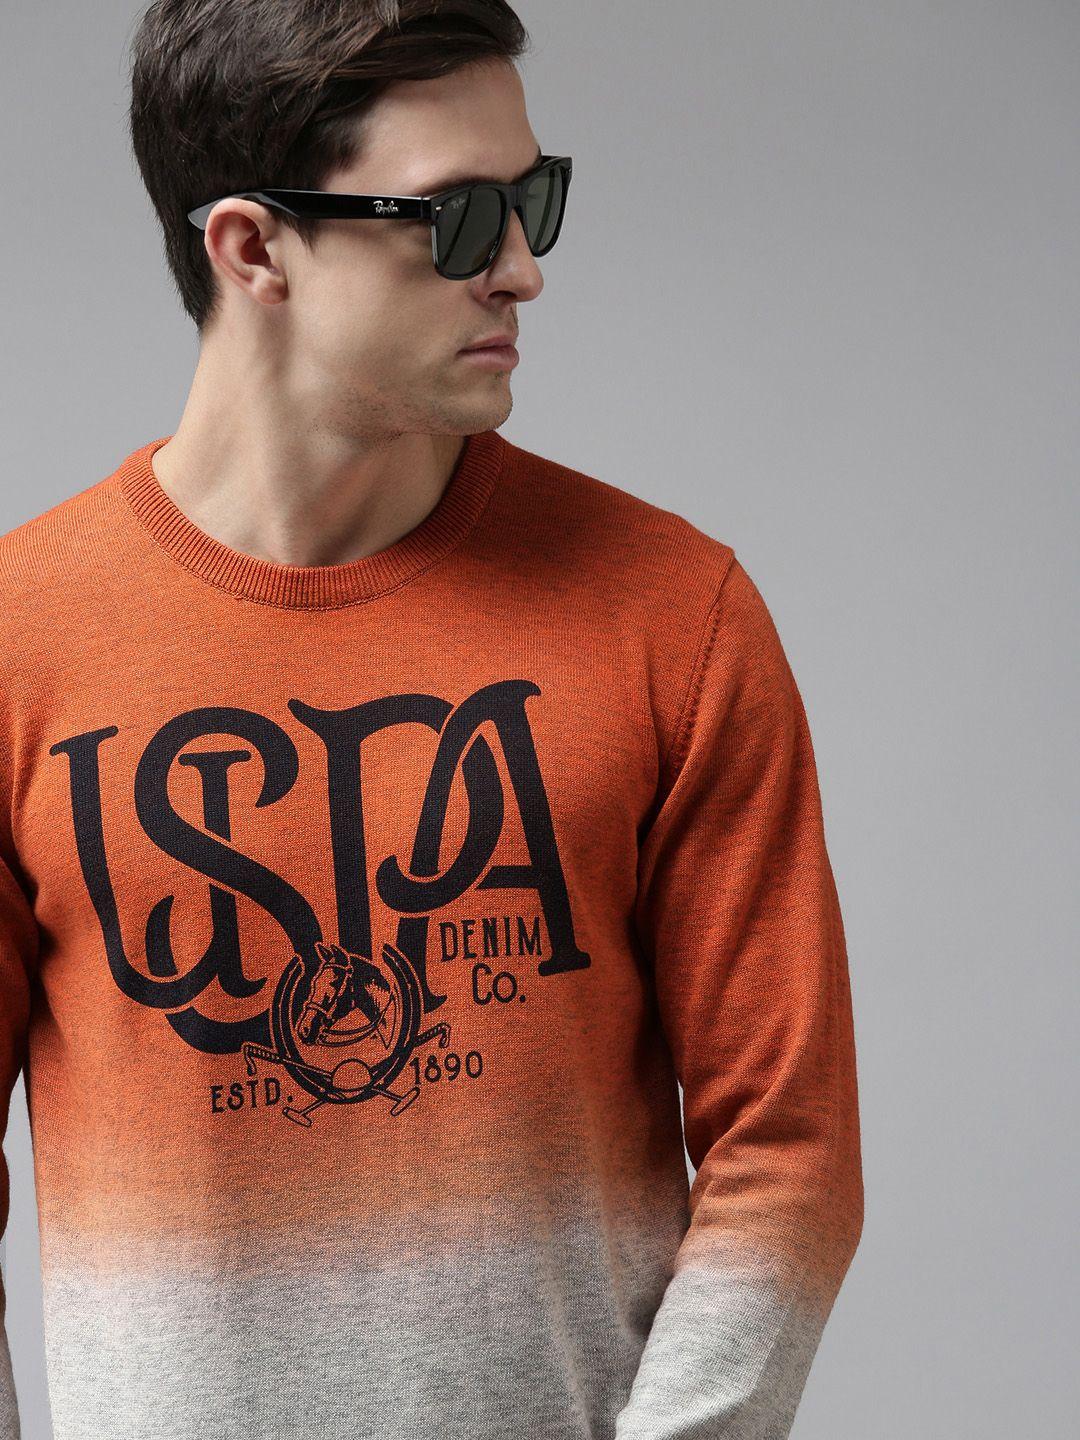 u s polo assn denim co men orange & grey brand logo printed pullover